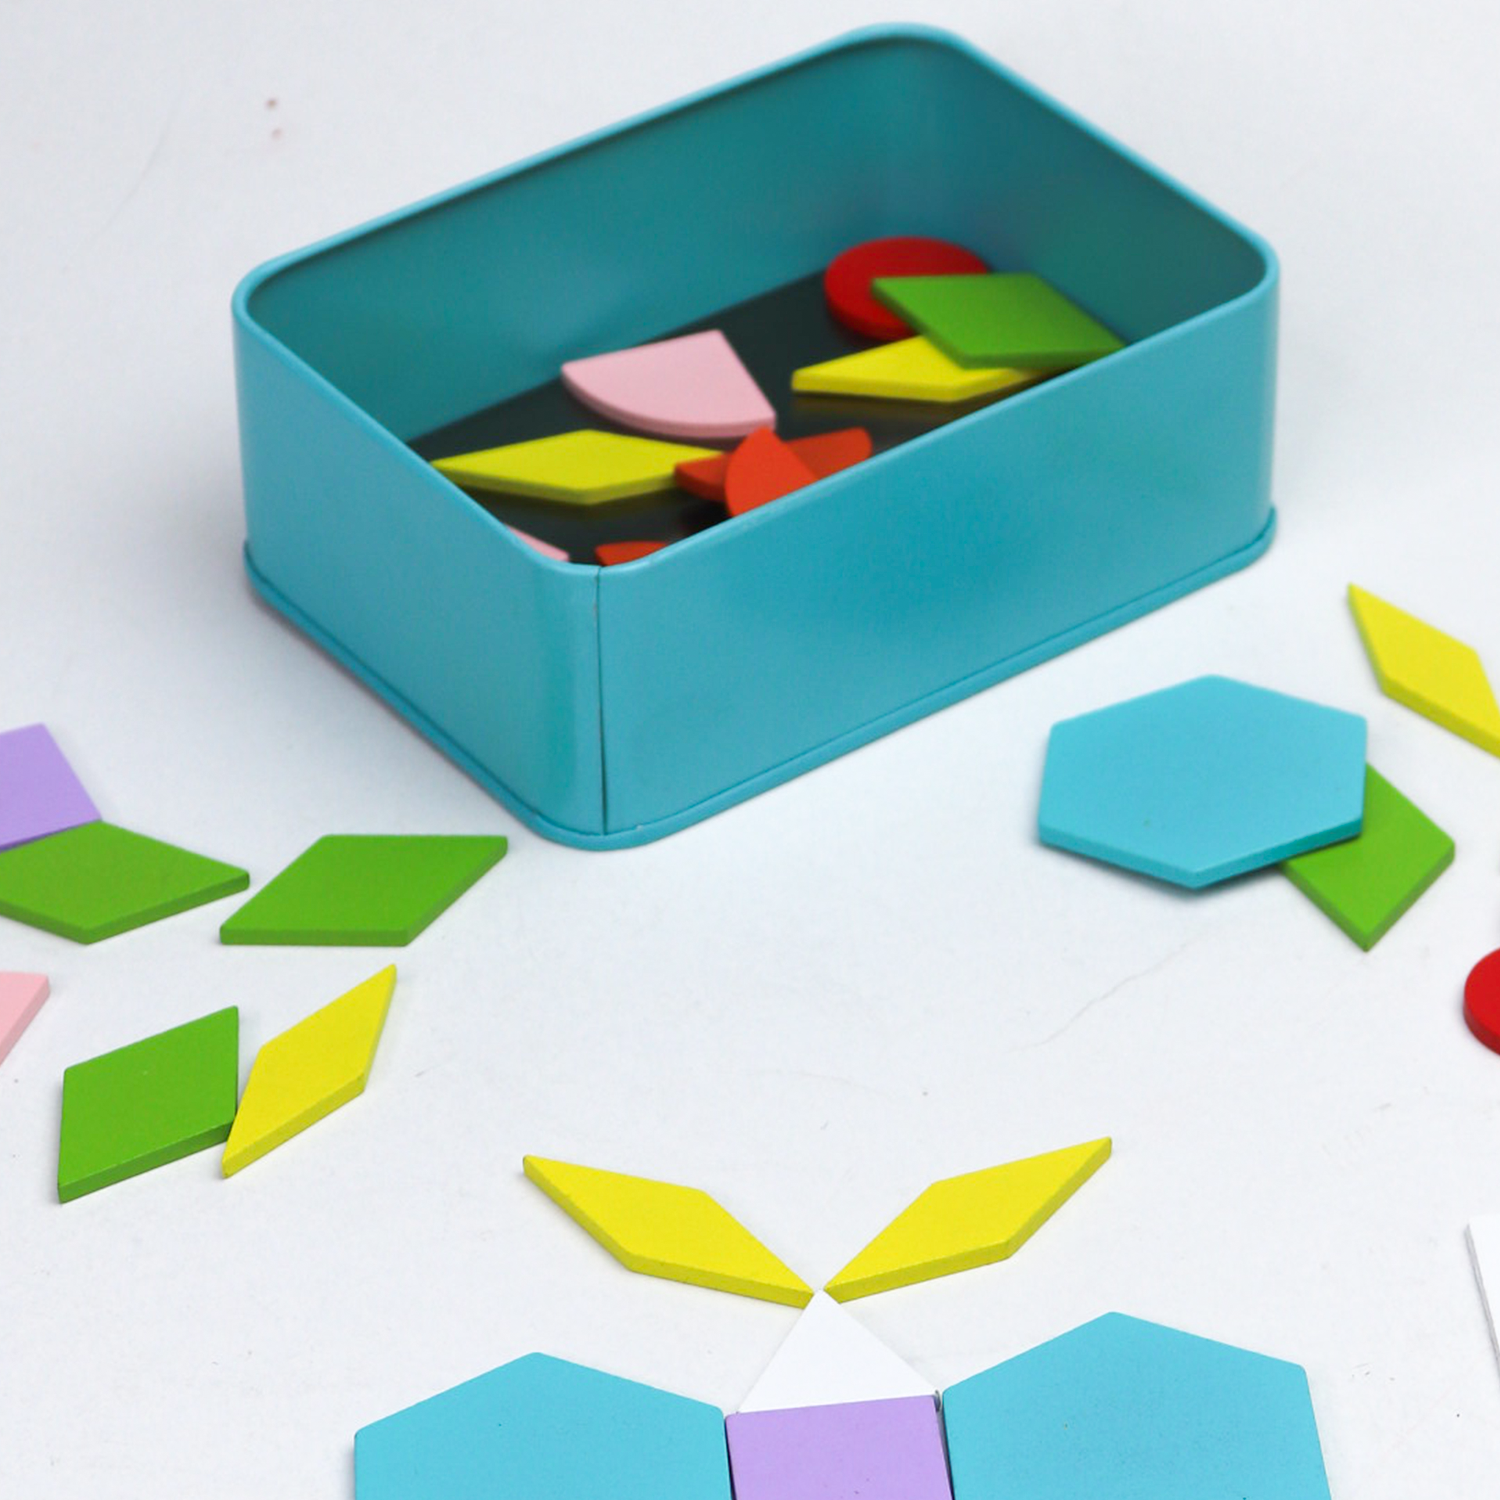 45 Pcs Polygonal Tangram Puzzle Wooden Toys